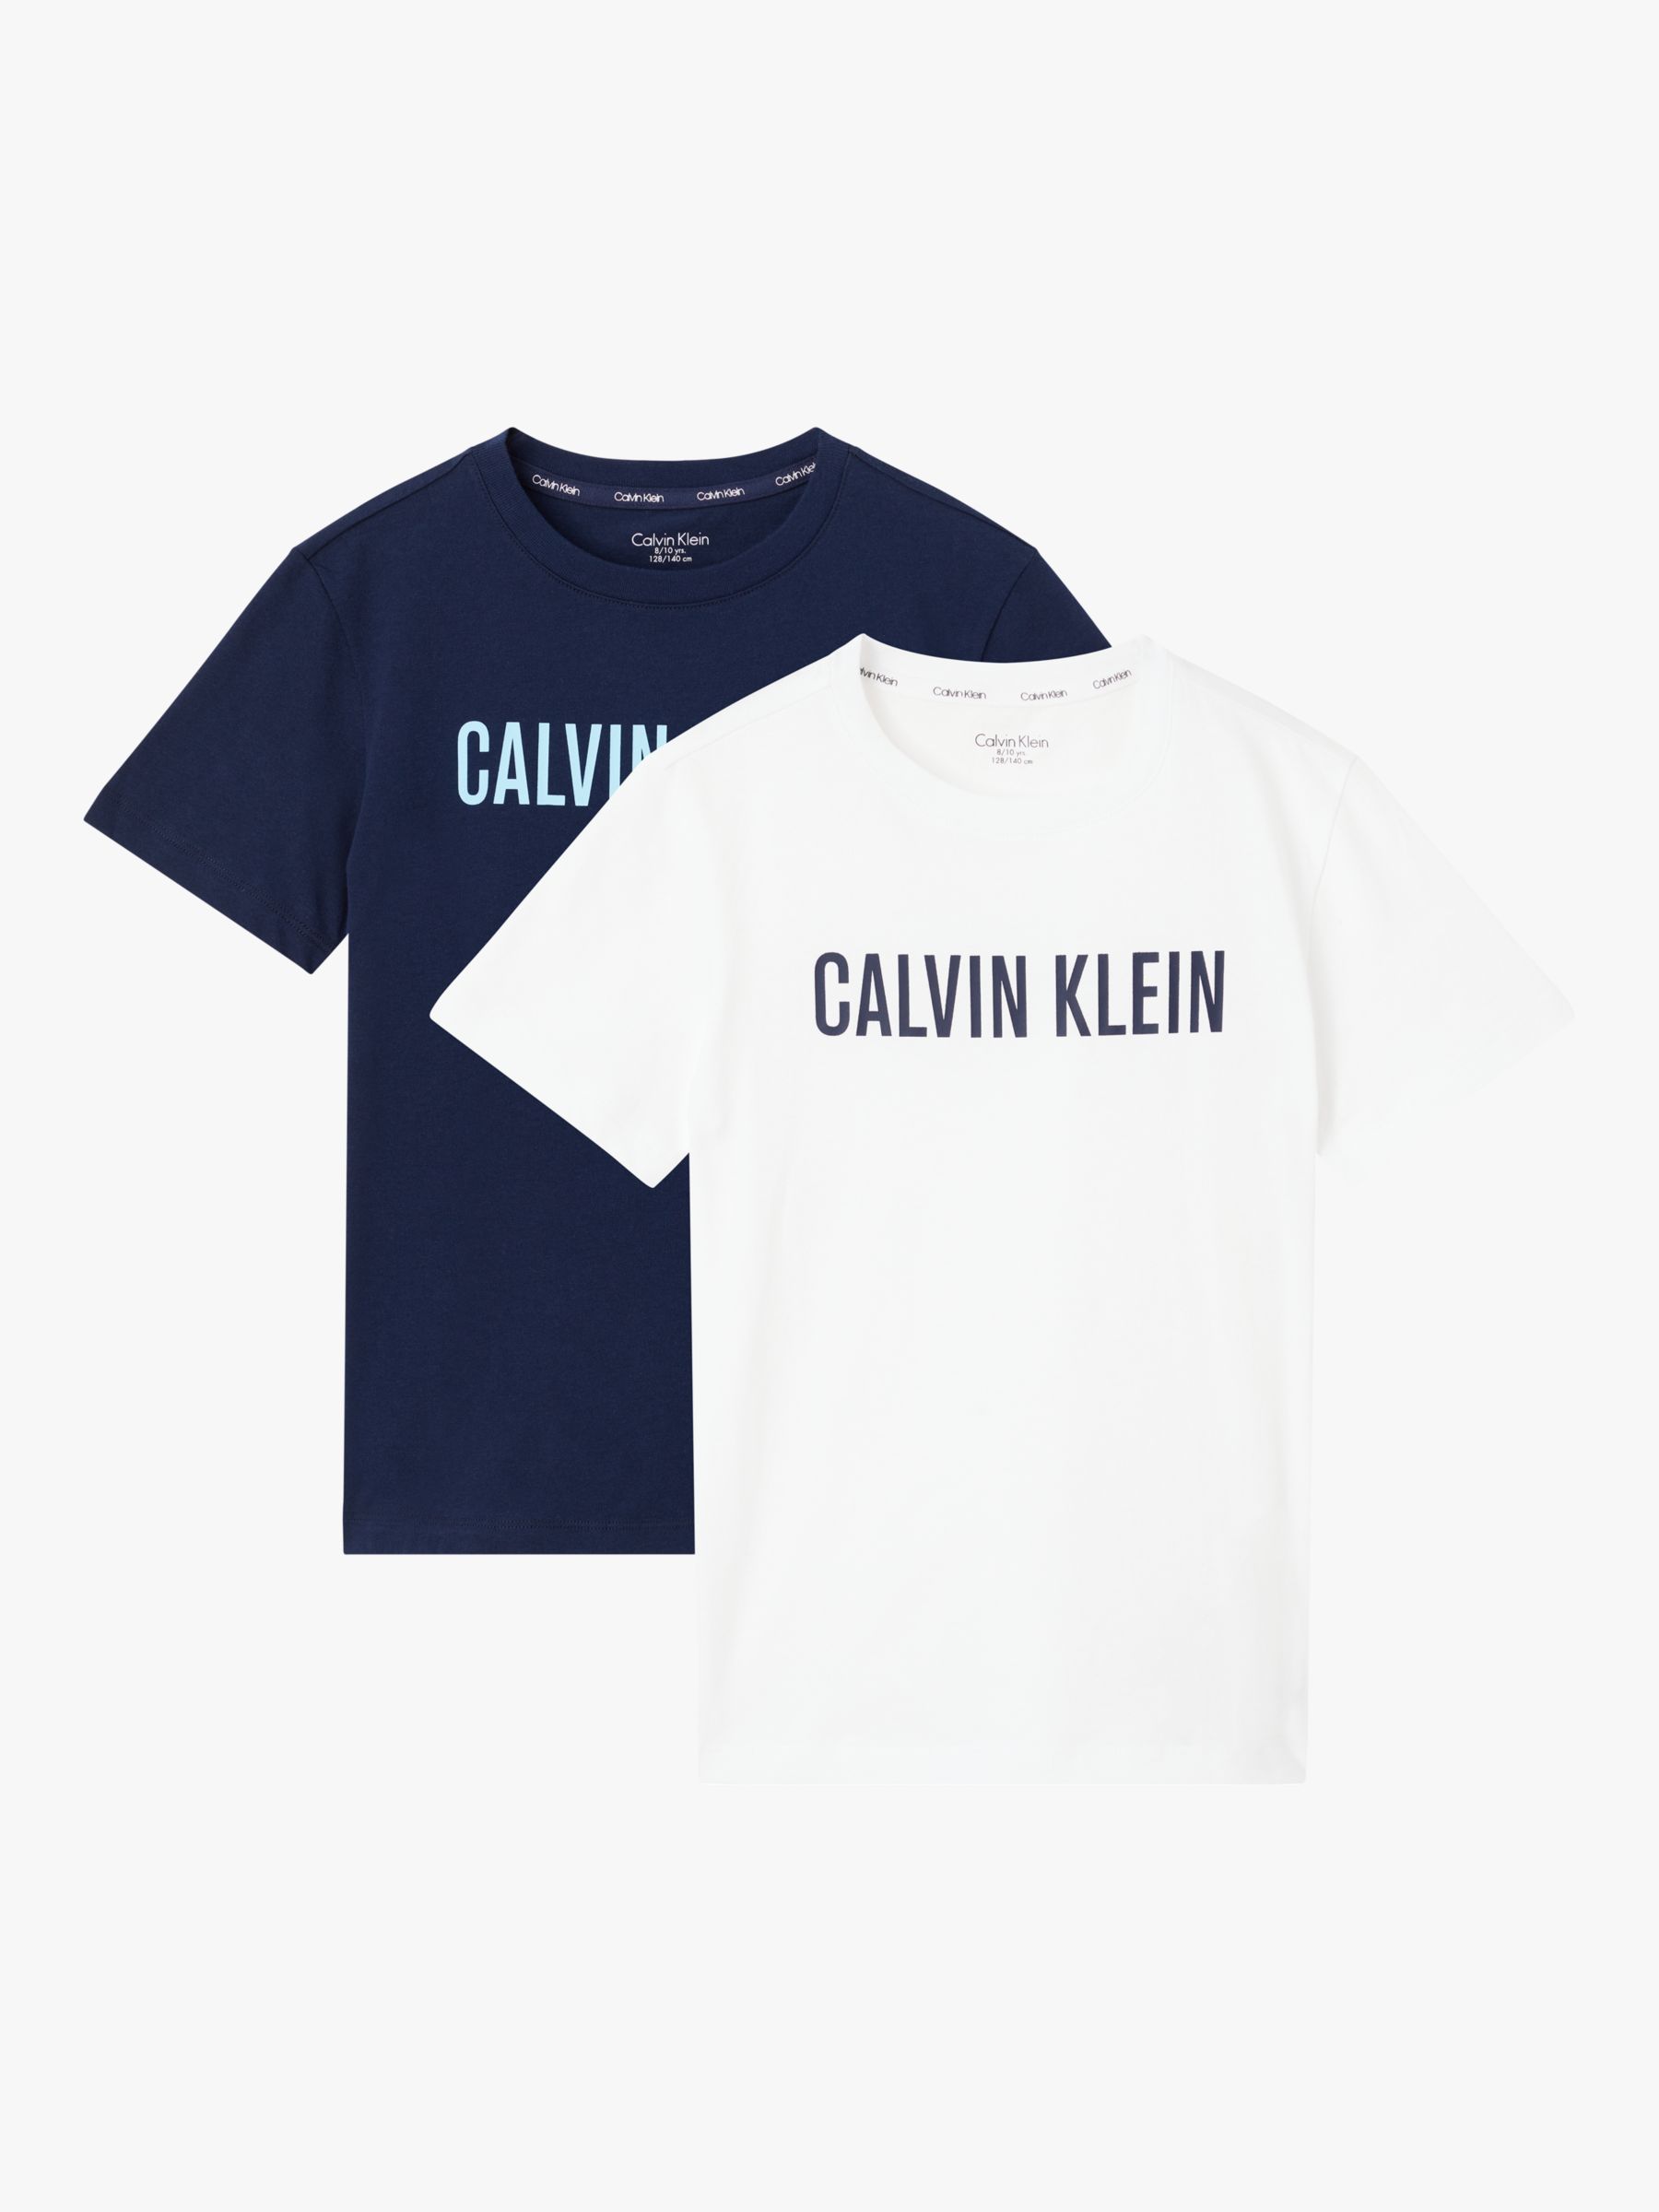 Calvin Klein Kids' Intense Power T-Shirt, Pack of 2, Iris Navy/White